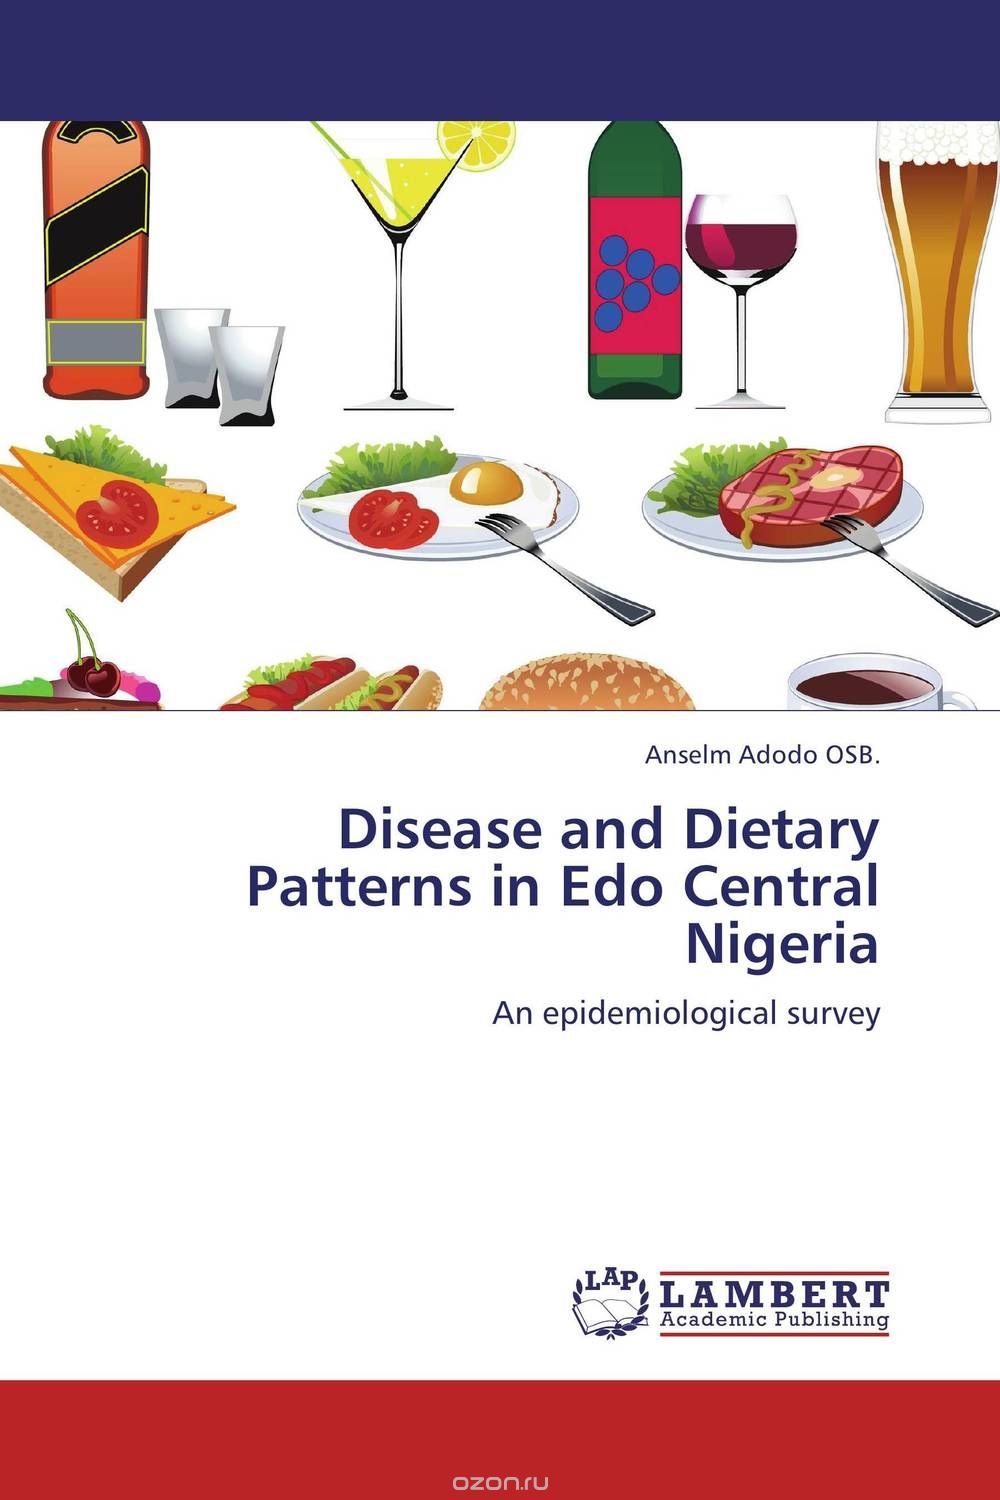 Скачать книгу "Disease and Dietary Patterns in Edo Central Nigeria"